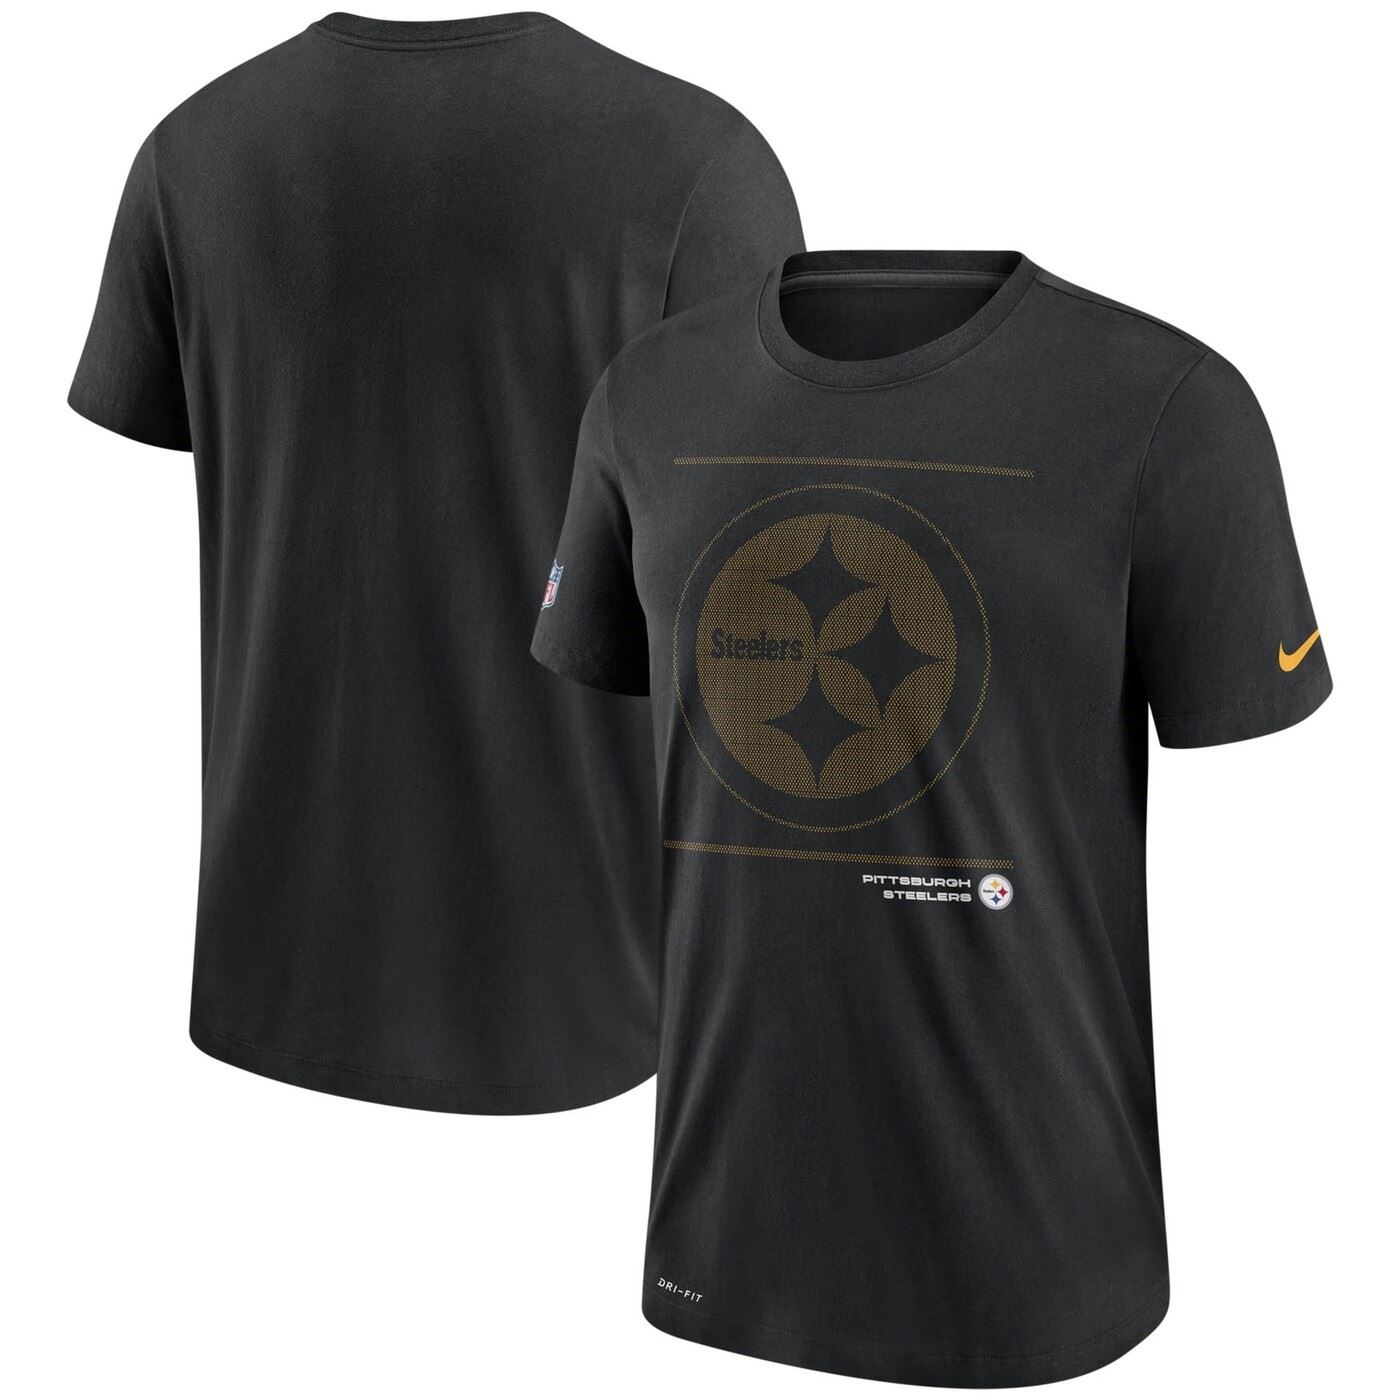 Pittsburgh Steelers NFL DFCT Team Issue Tee Black T-Shirt Nike